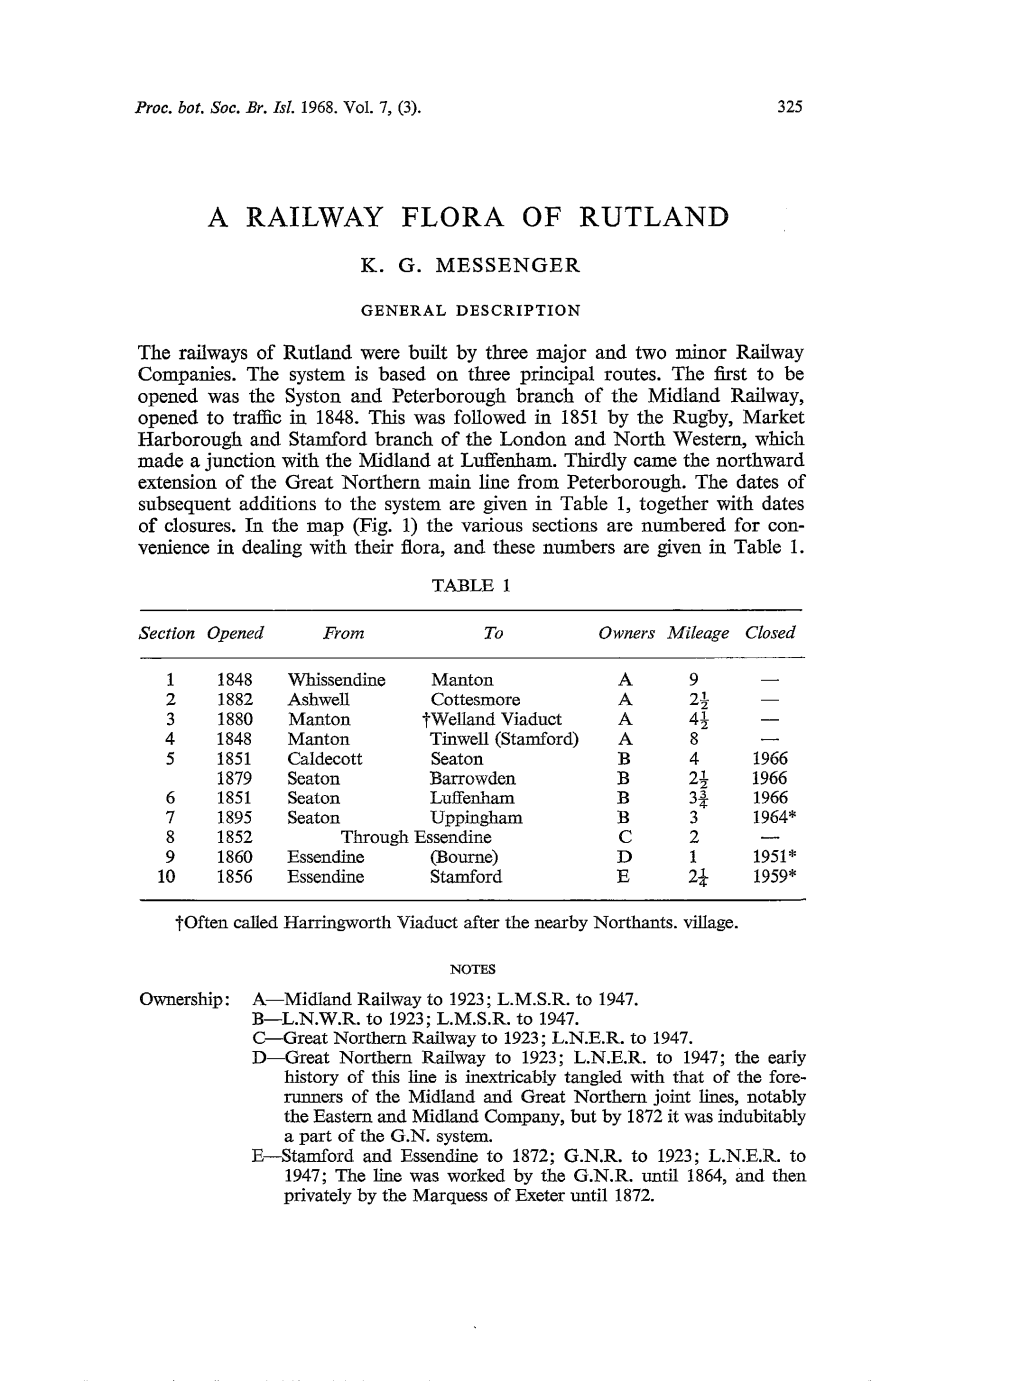 A Railway Flora of Rutland